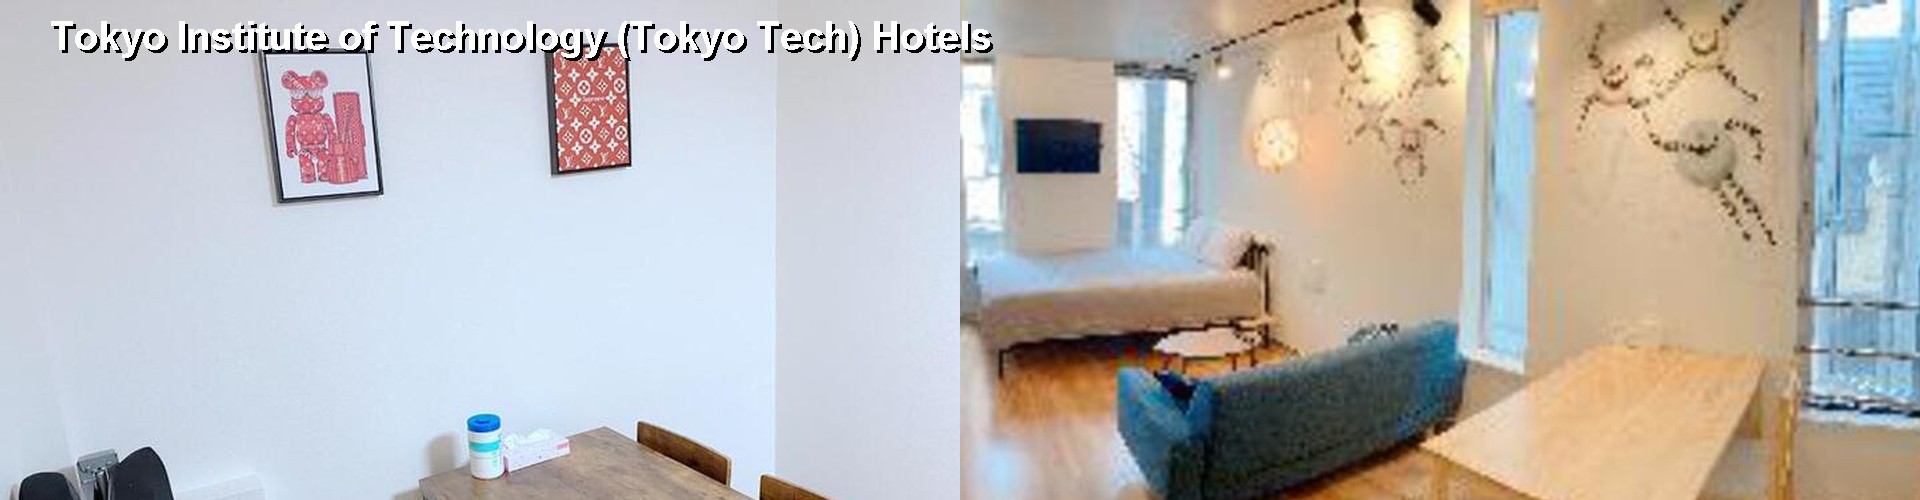 5 Best Hotels near Tokyo Institute of Technology (Tokyo Tech)